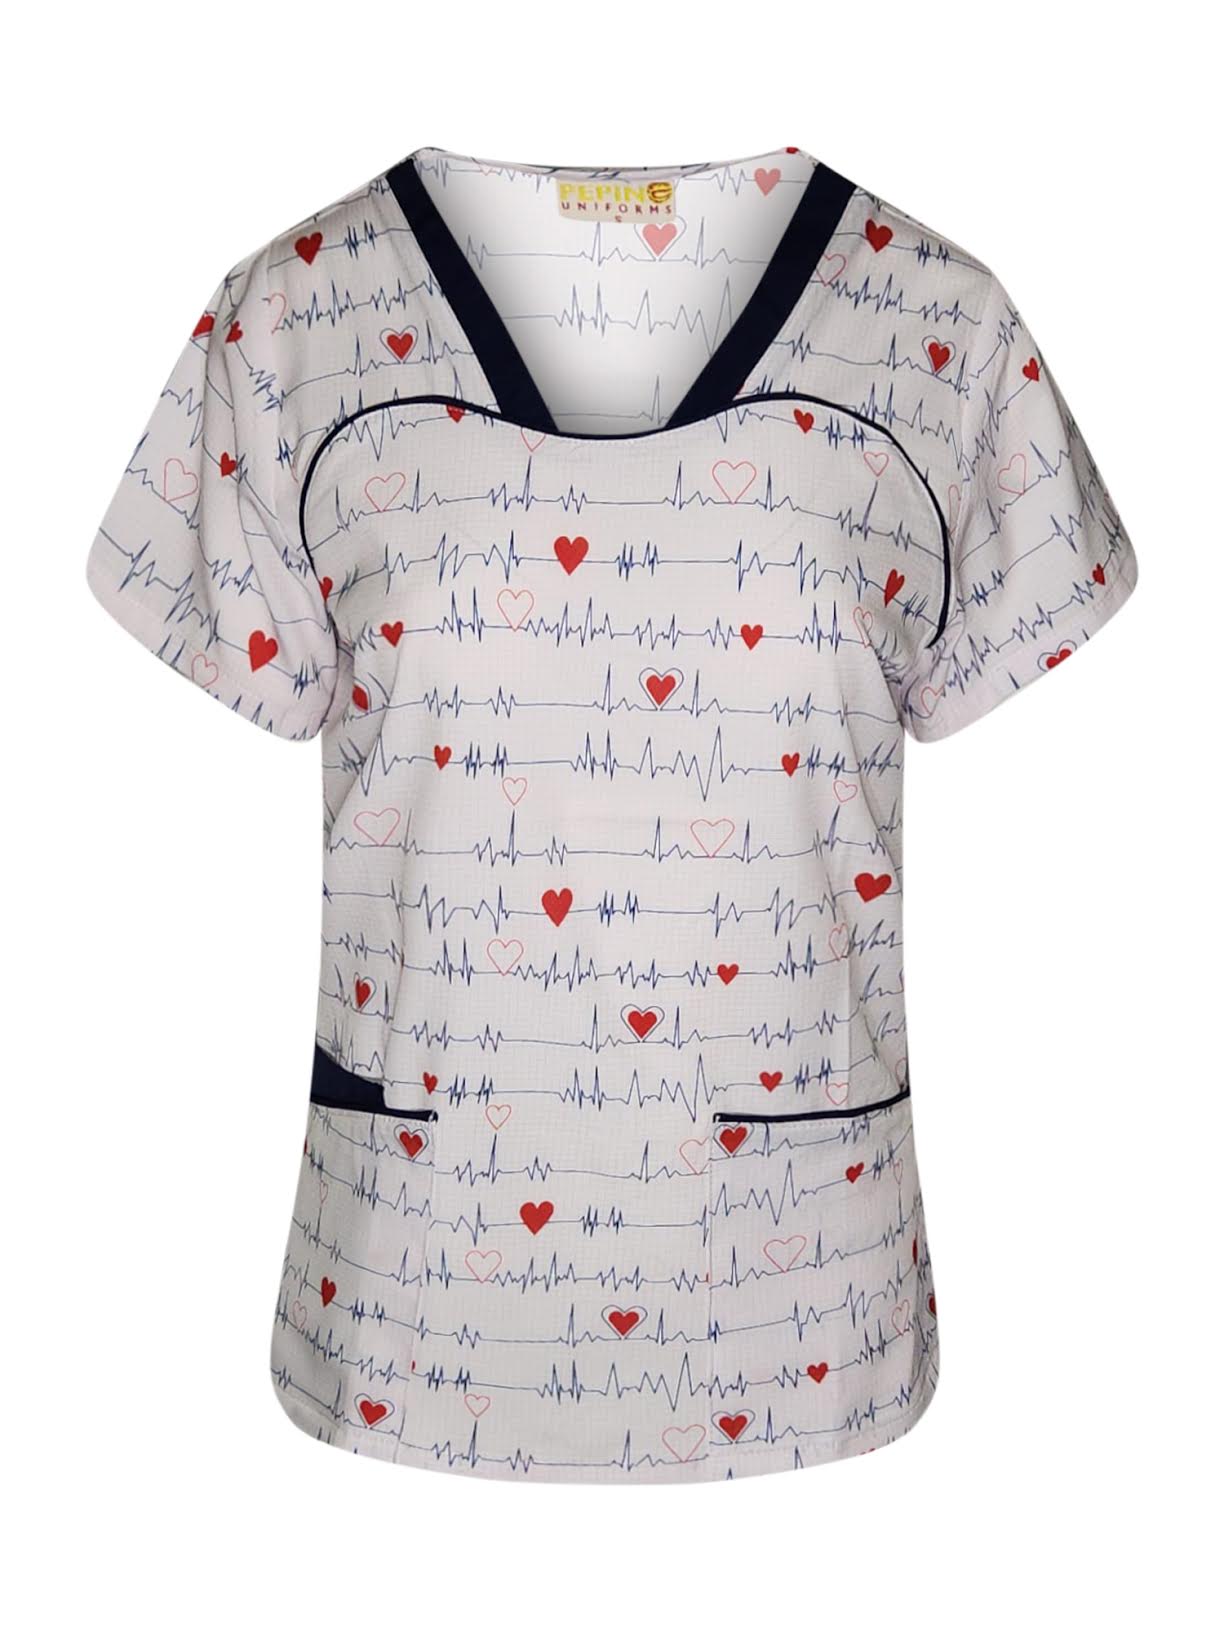 Pepino Uniforms Printed Navy EKG Piping V-Neck Top